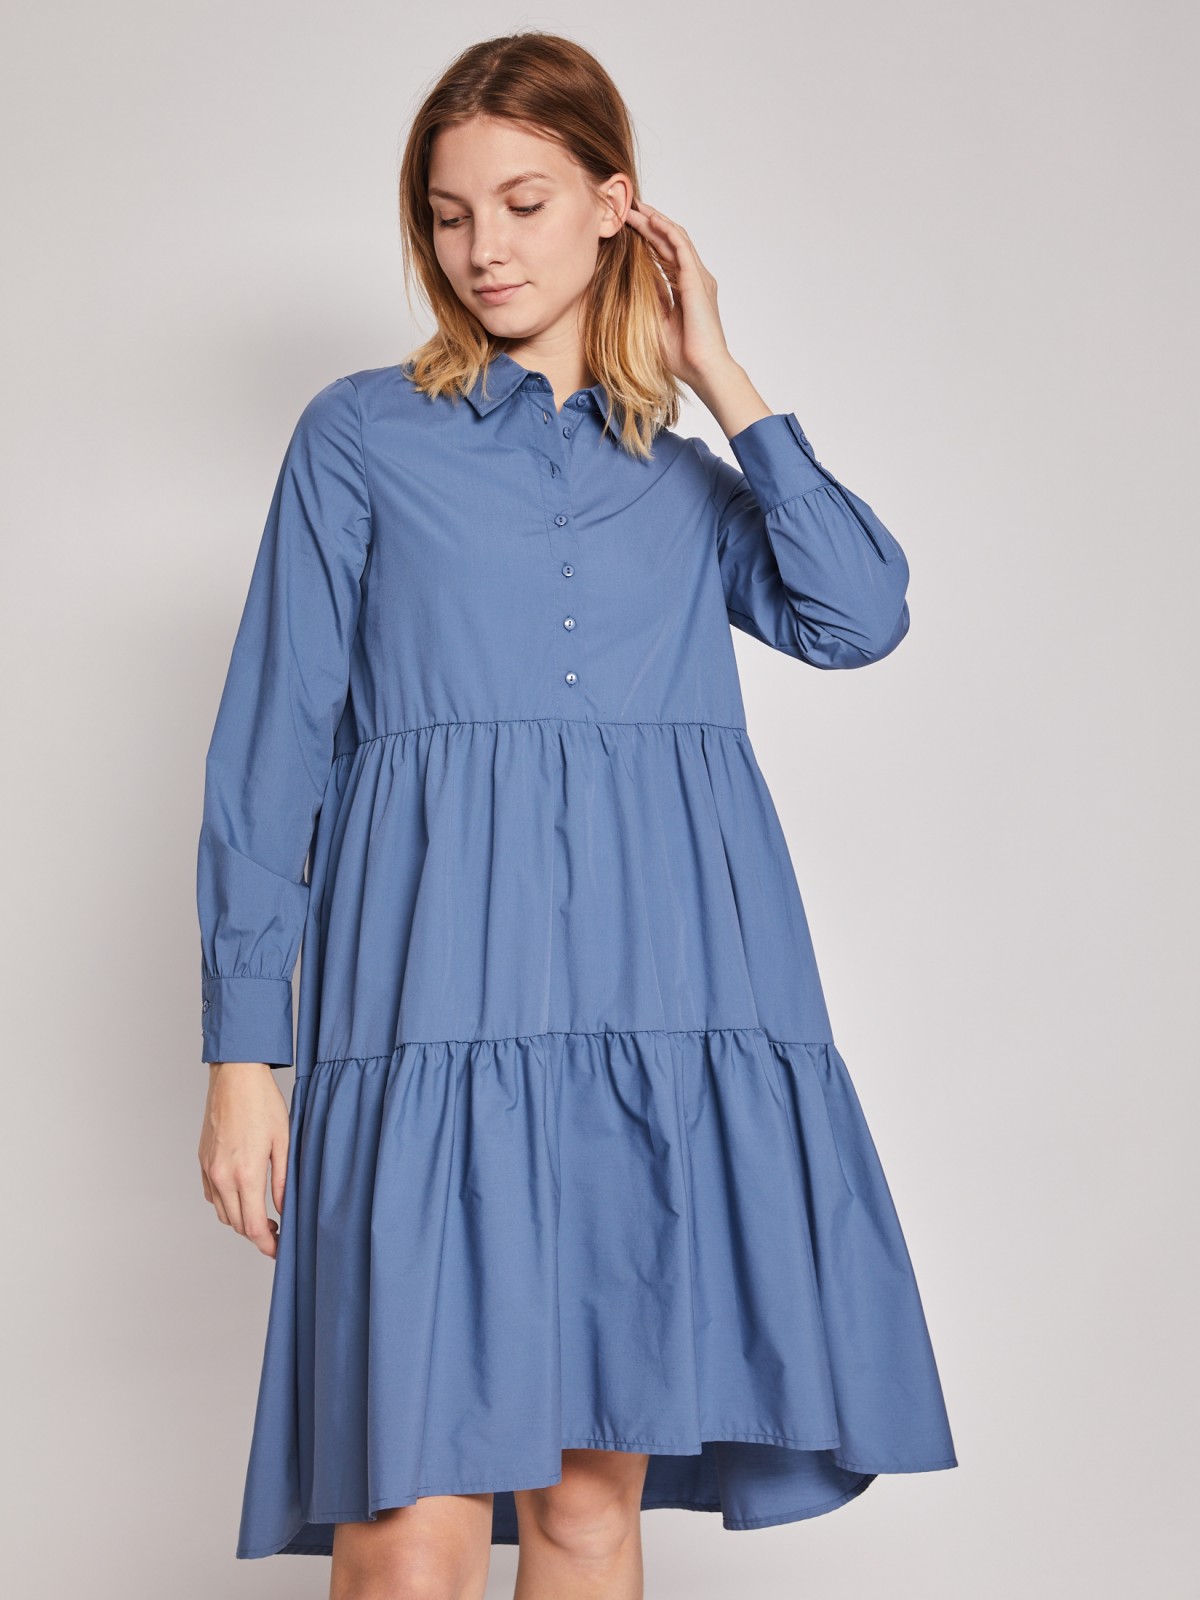 Ярусное платье-рубашка zolla 022138291223, цвет голубой, размер XS - фото 5